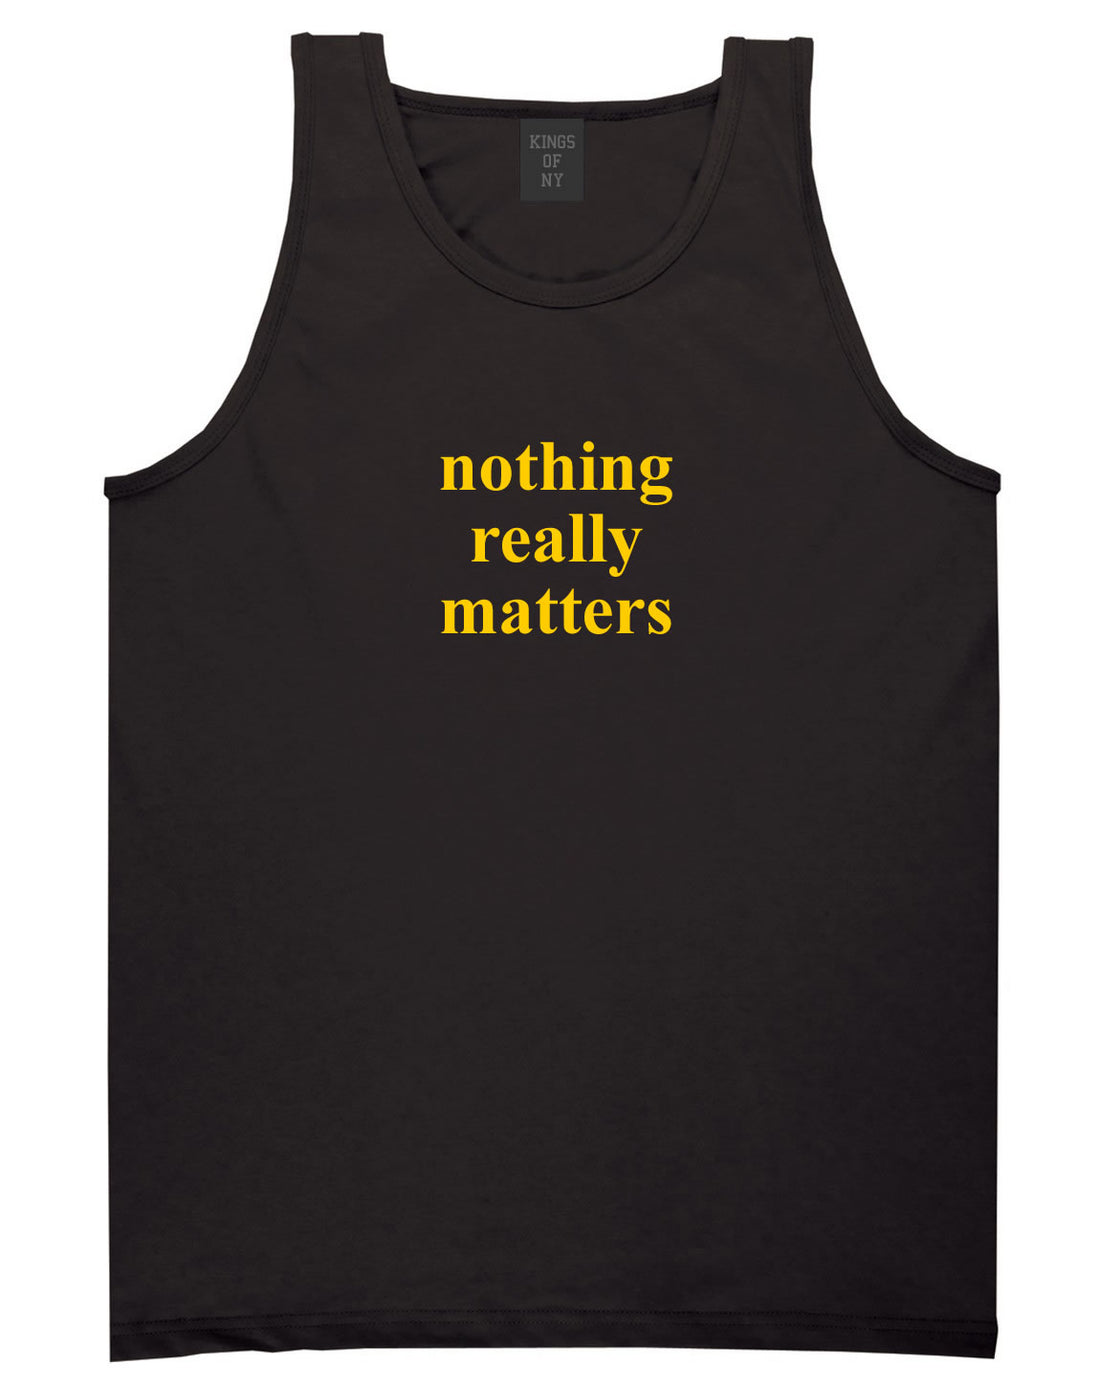 Nothing Really Matters Mens Tank Top Shirt Black By Kings Of NY